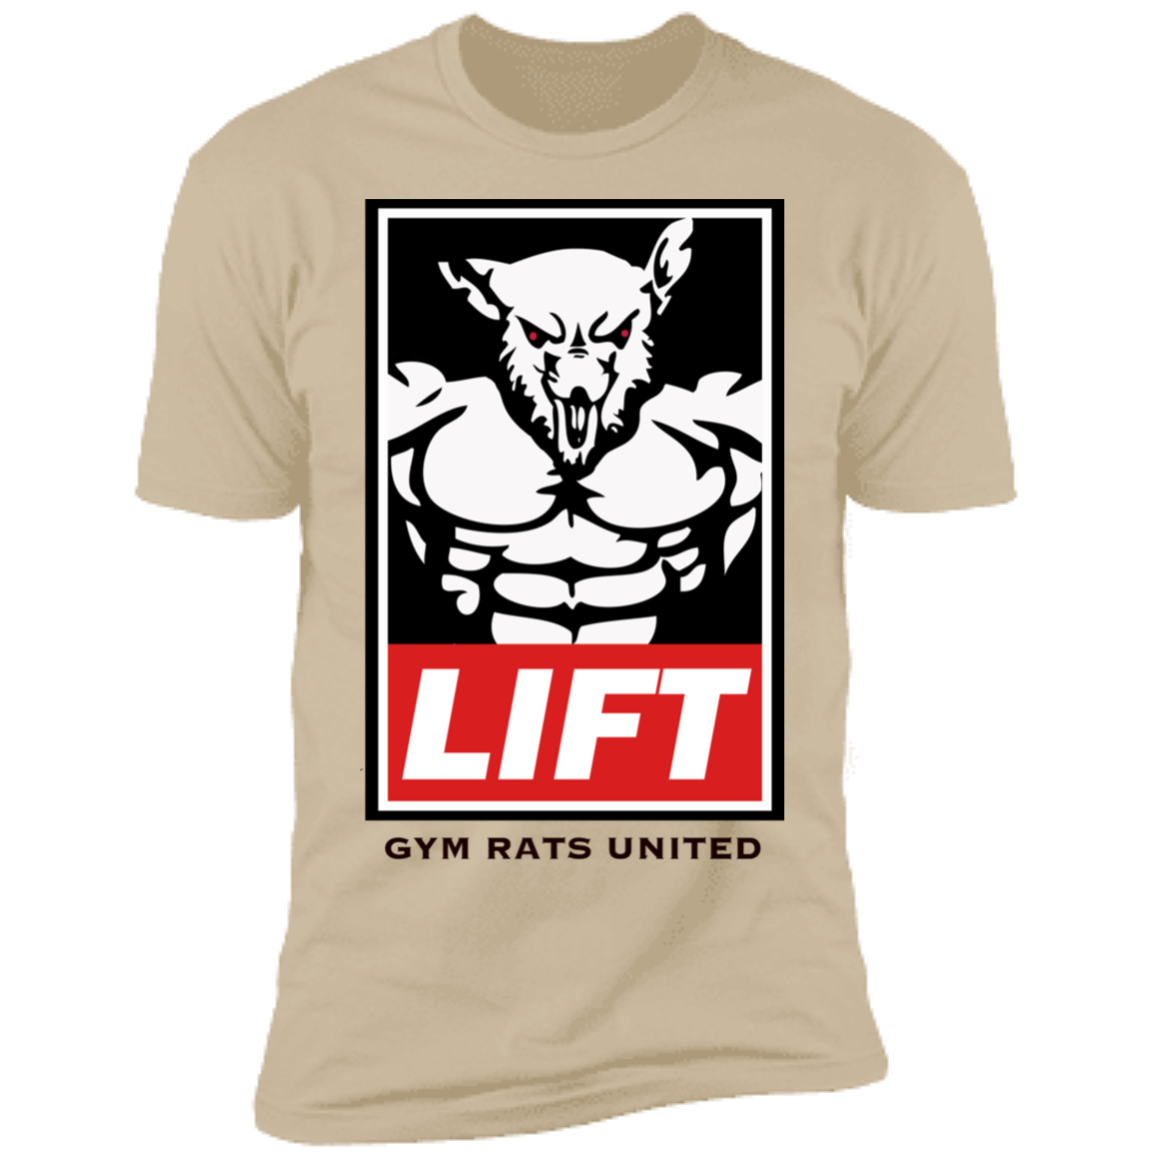 Gym Rats United Lift Tee